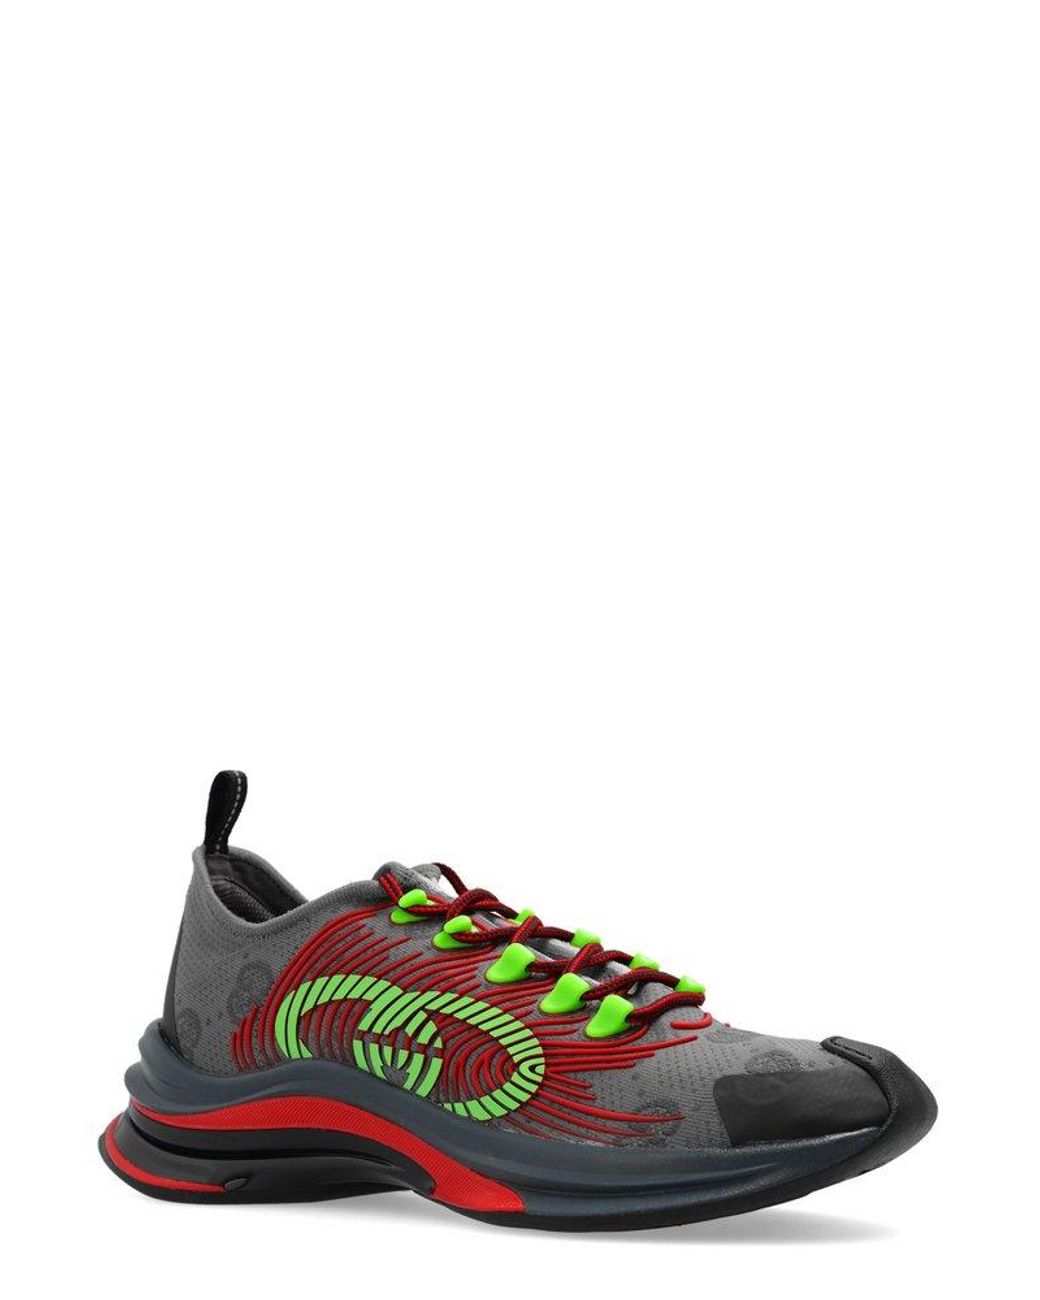 Gucci Men's Reflex Leopard Print Gray Fabric Running Sneakers | Sneakers,  Gucci men, Running sneakers